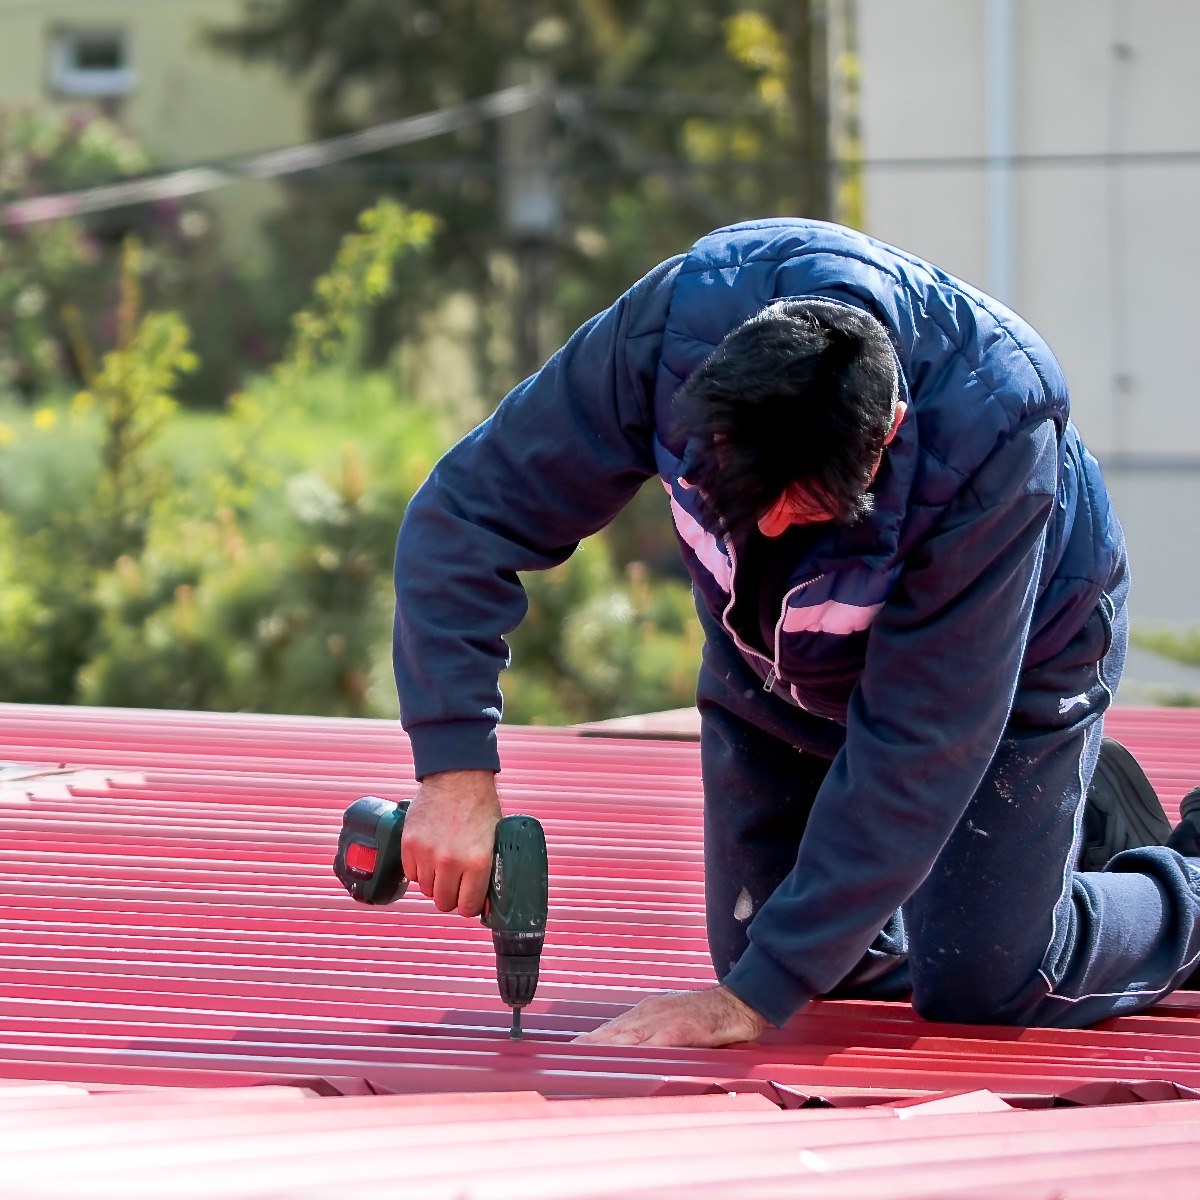 residential roofer repairs metal roof installation